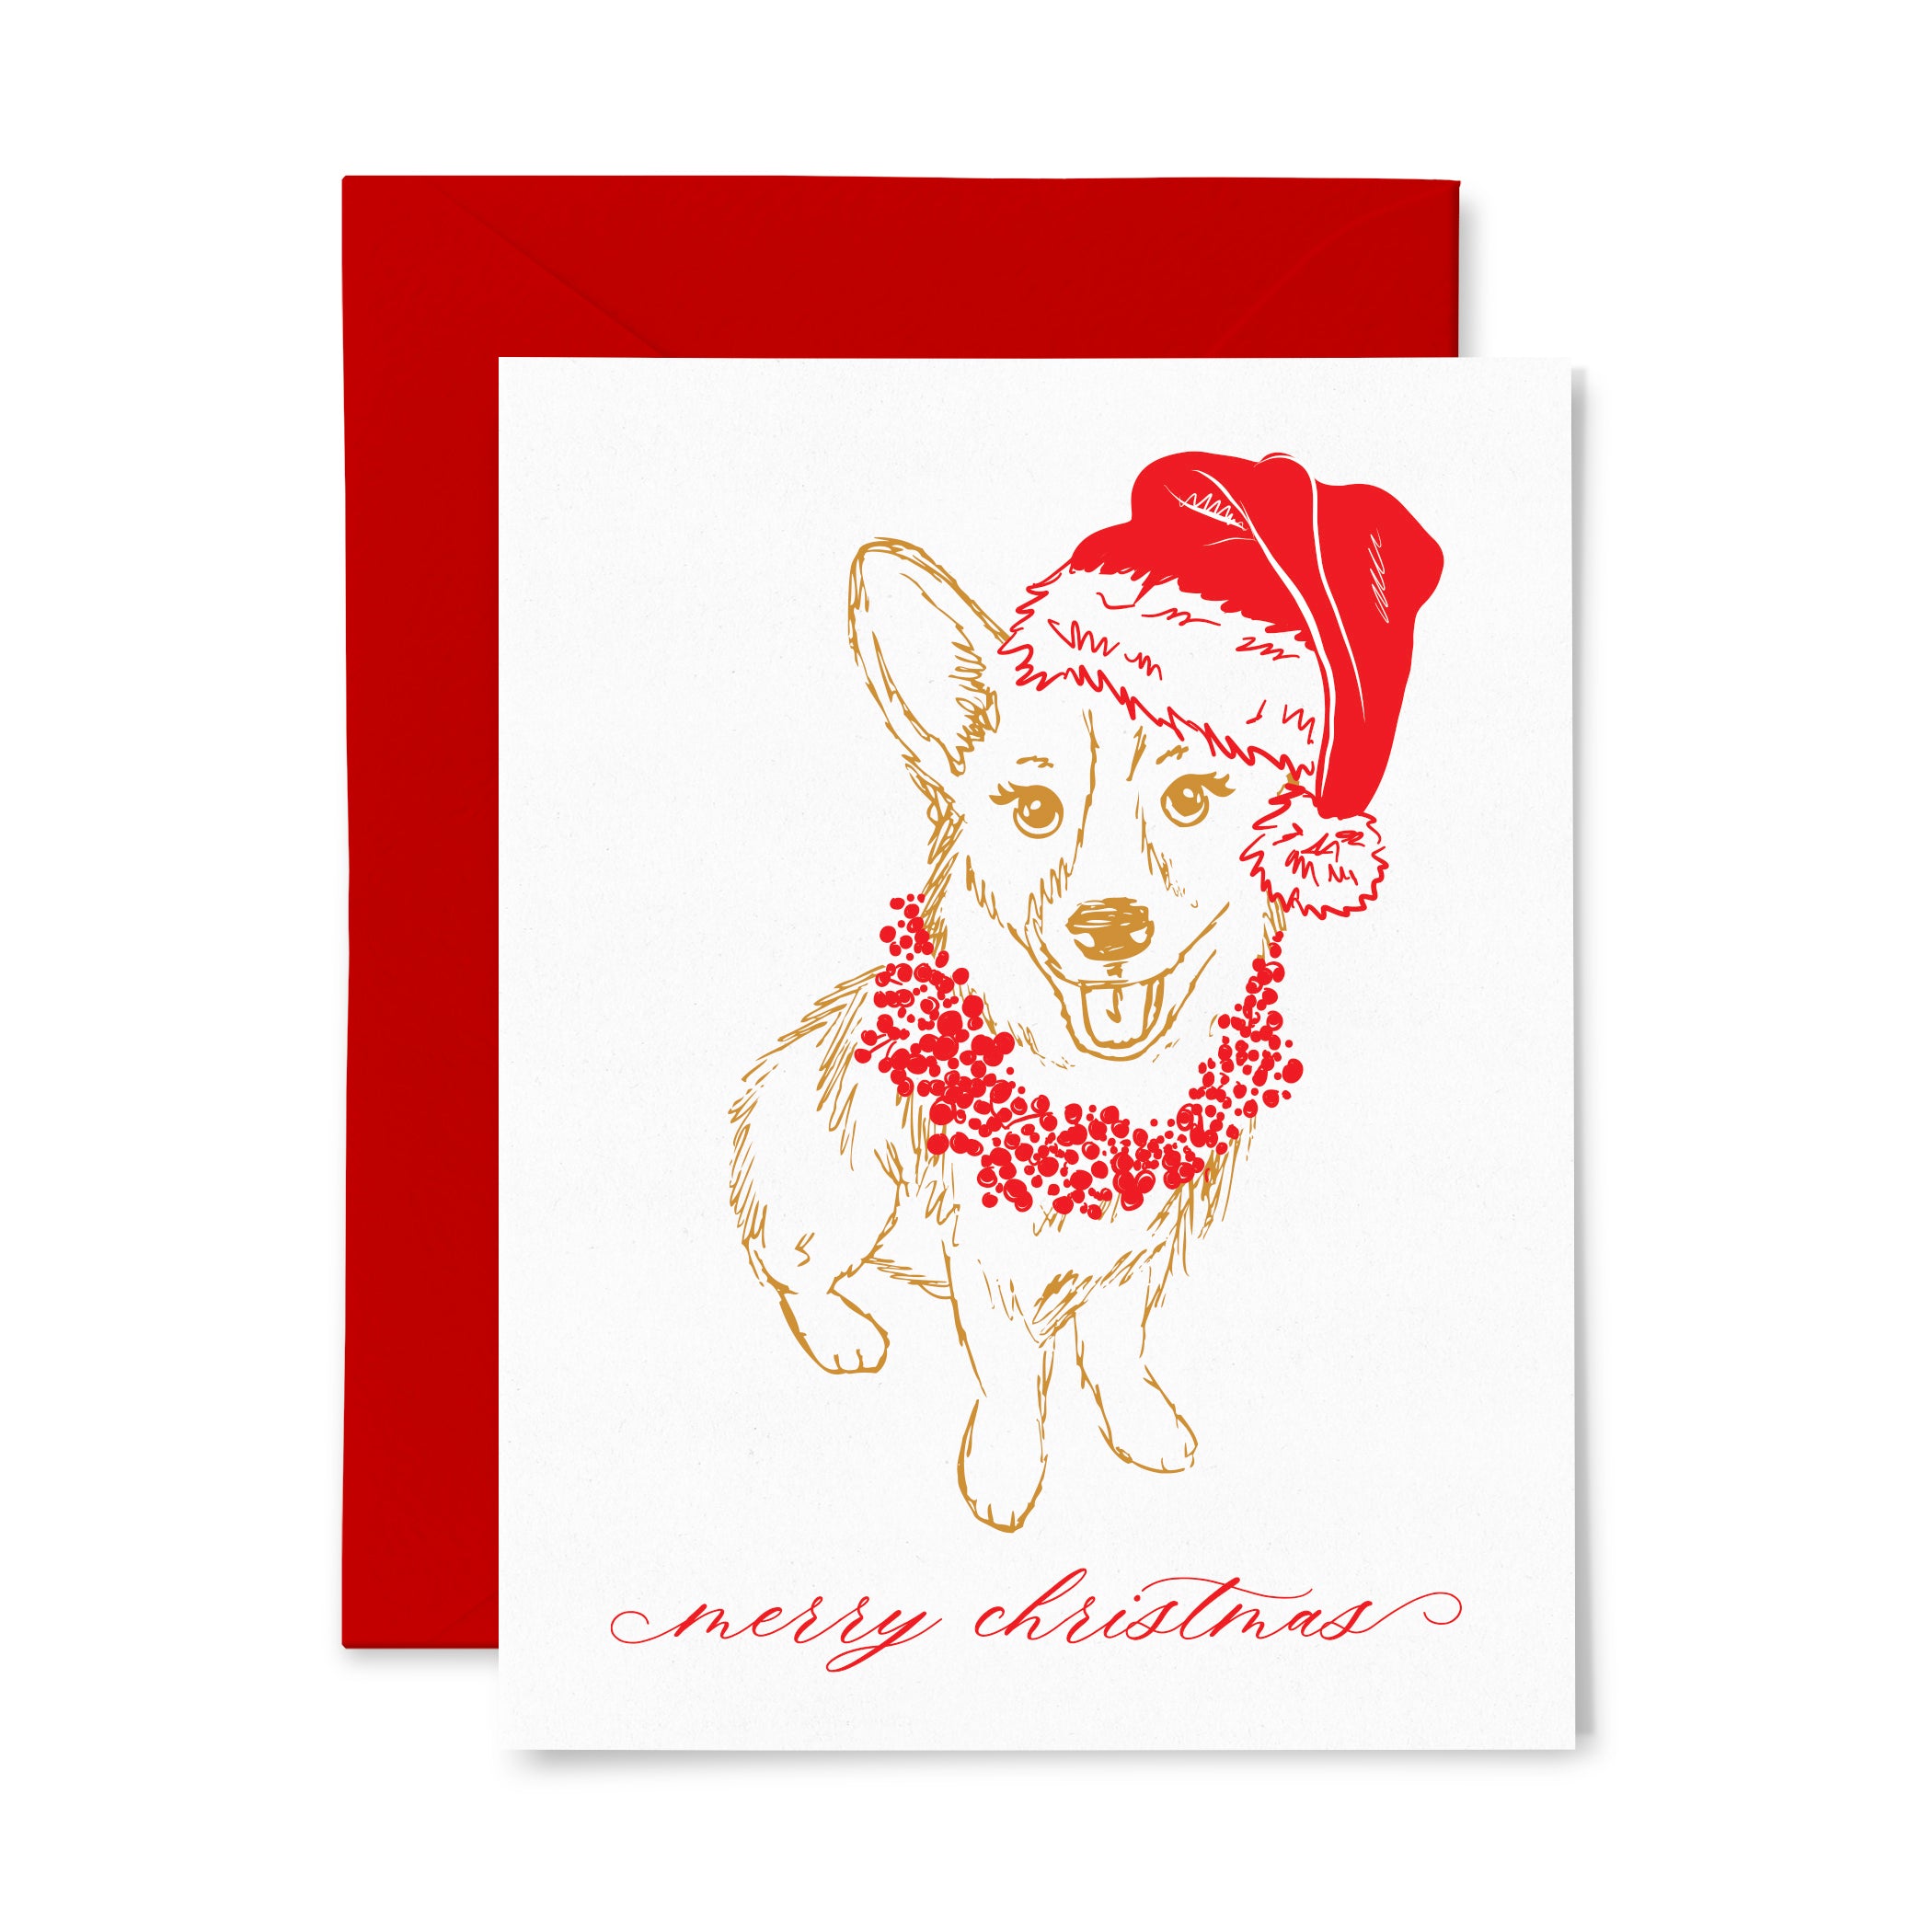 Corgi christmas holiday letterpress greeting card â color box letterpress